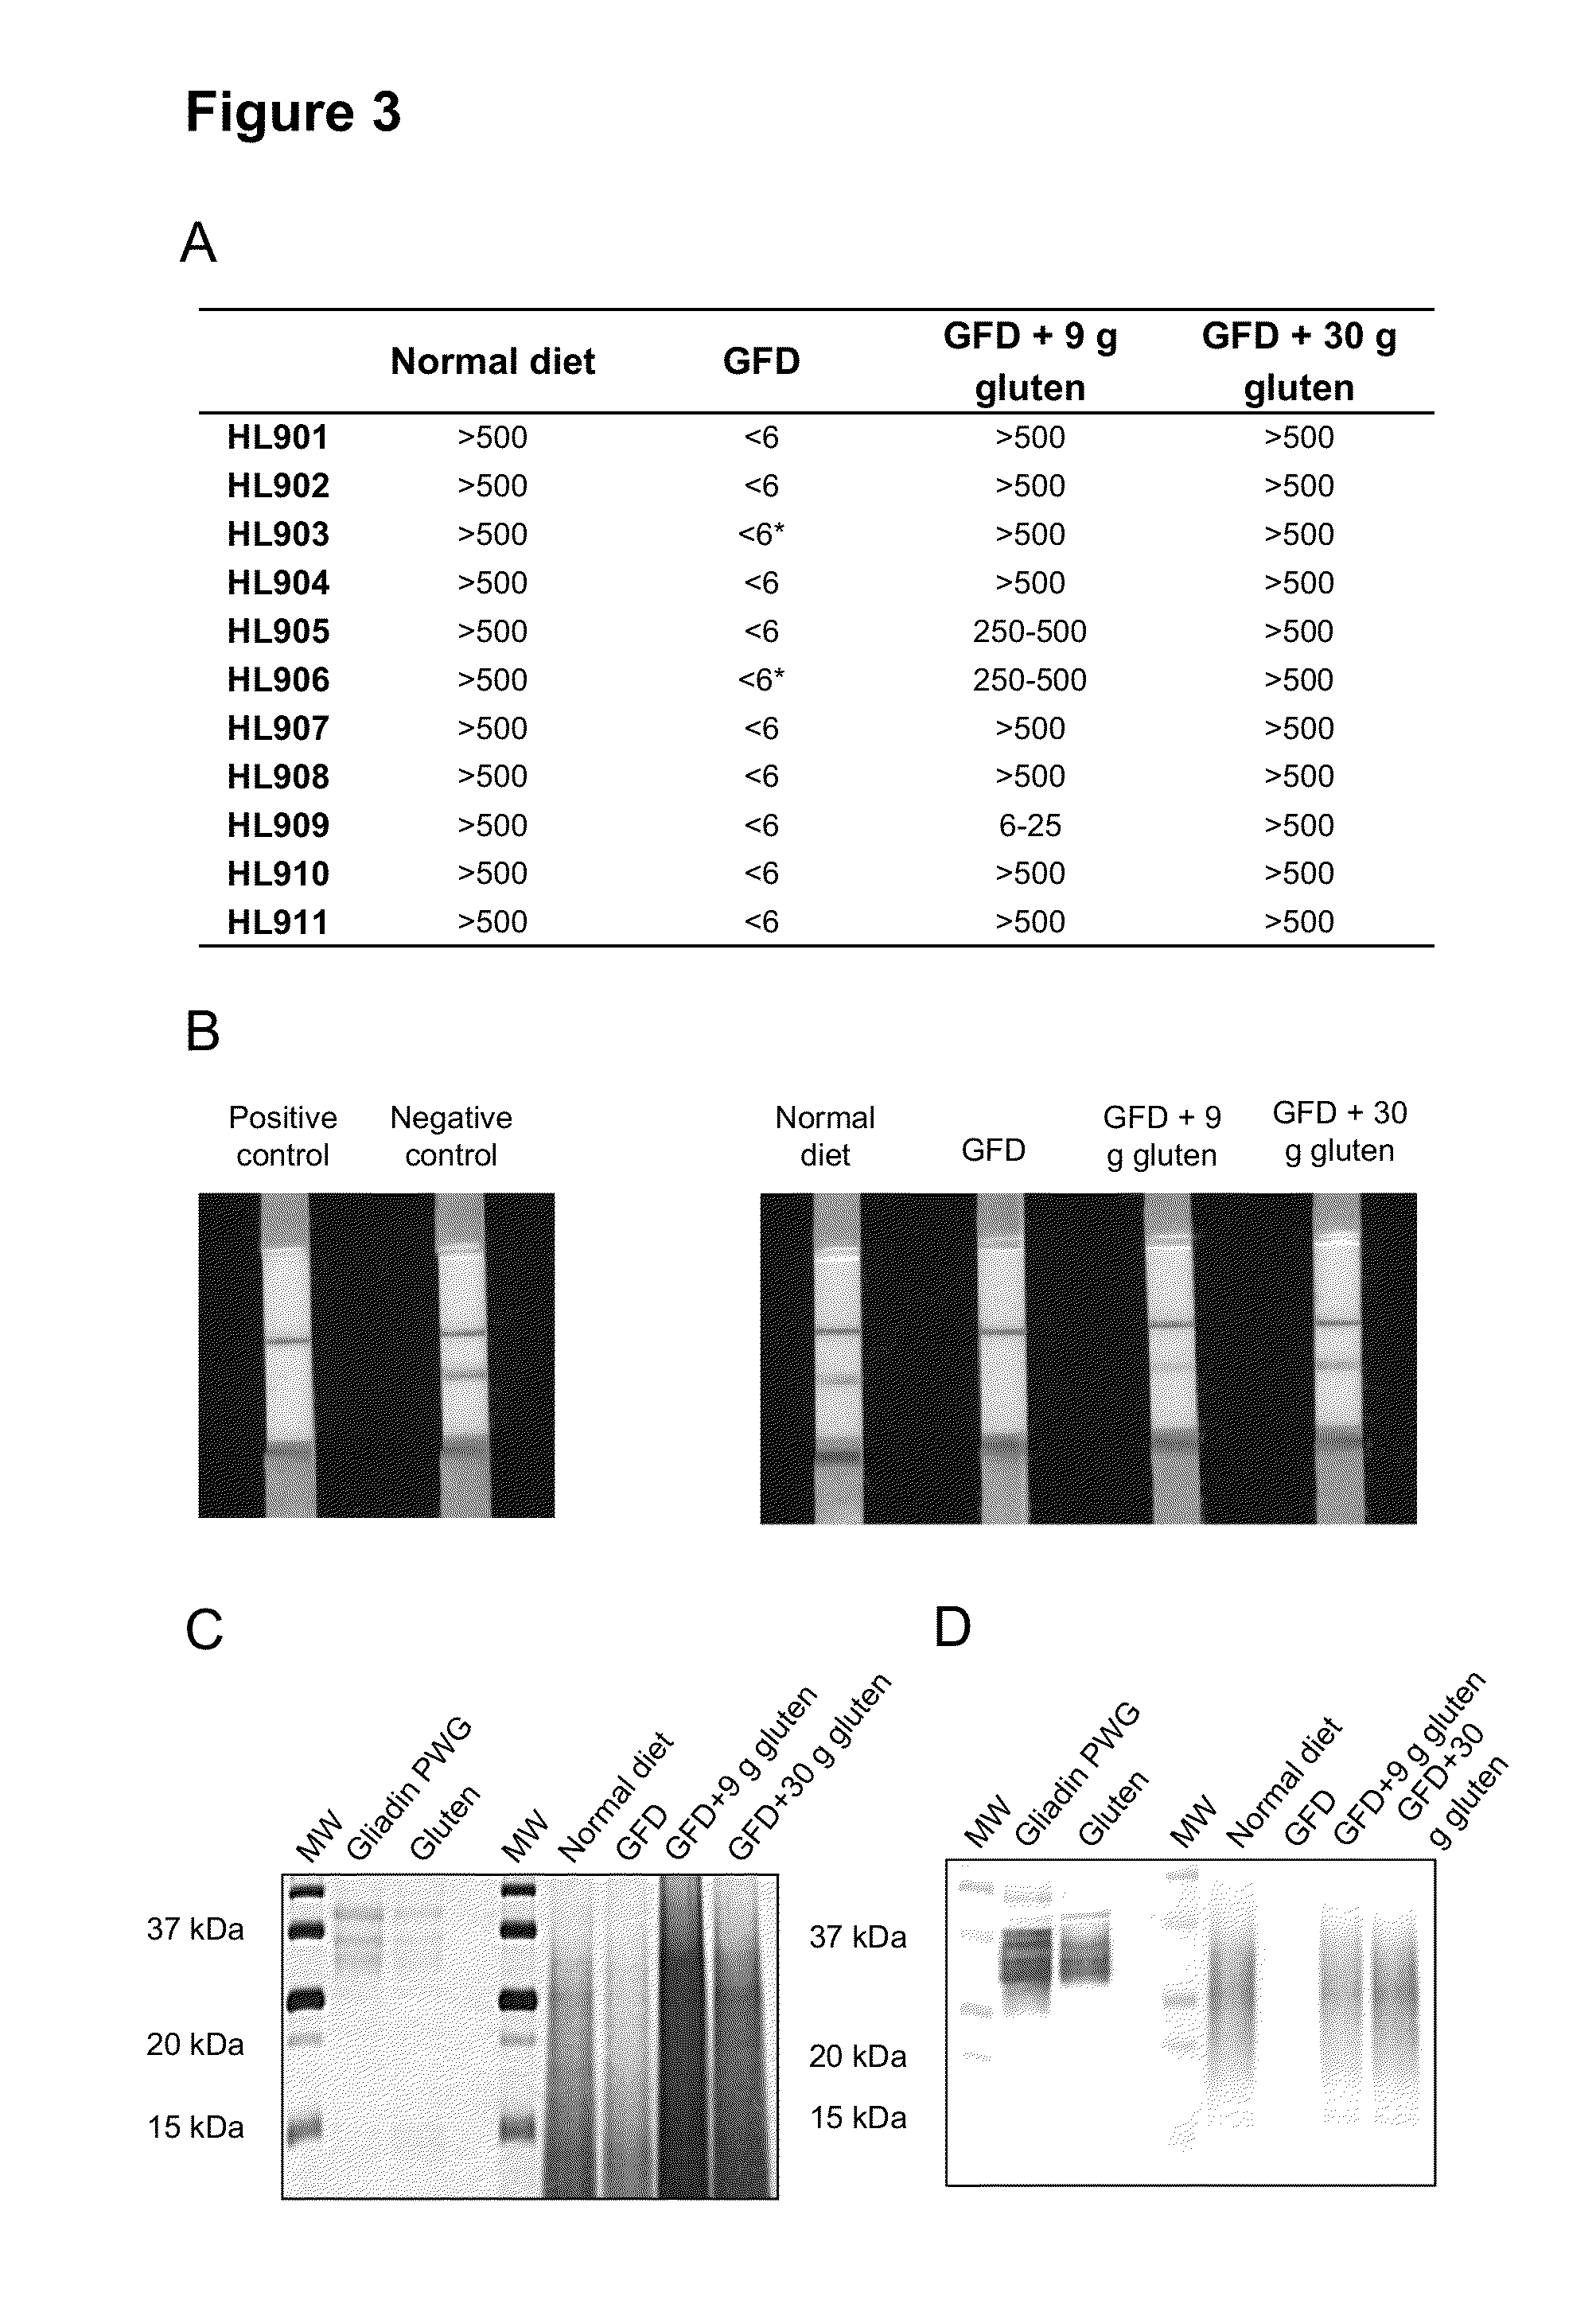 Determination of levels of immunogenic gluten peptides in human samples